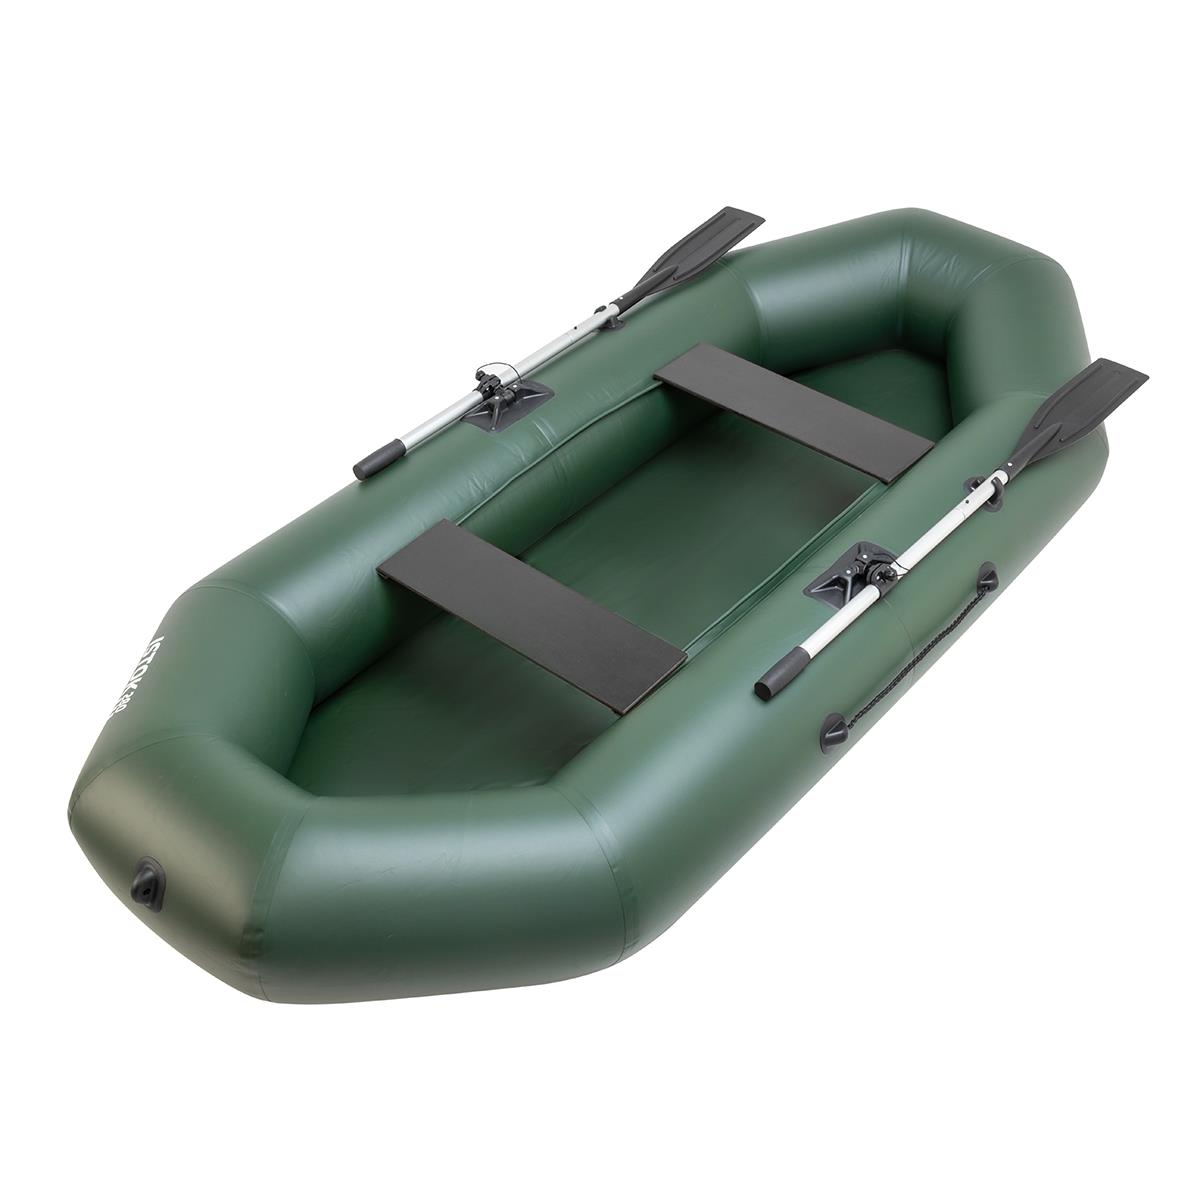 Лодка для рыбалки  ISTOK 280 зеленый Тонар кресло складное серый зеленый без чехла t hs 96806h gg 1 пр во тонар helios